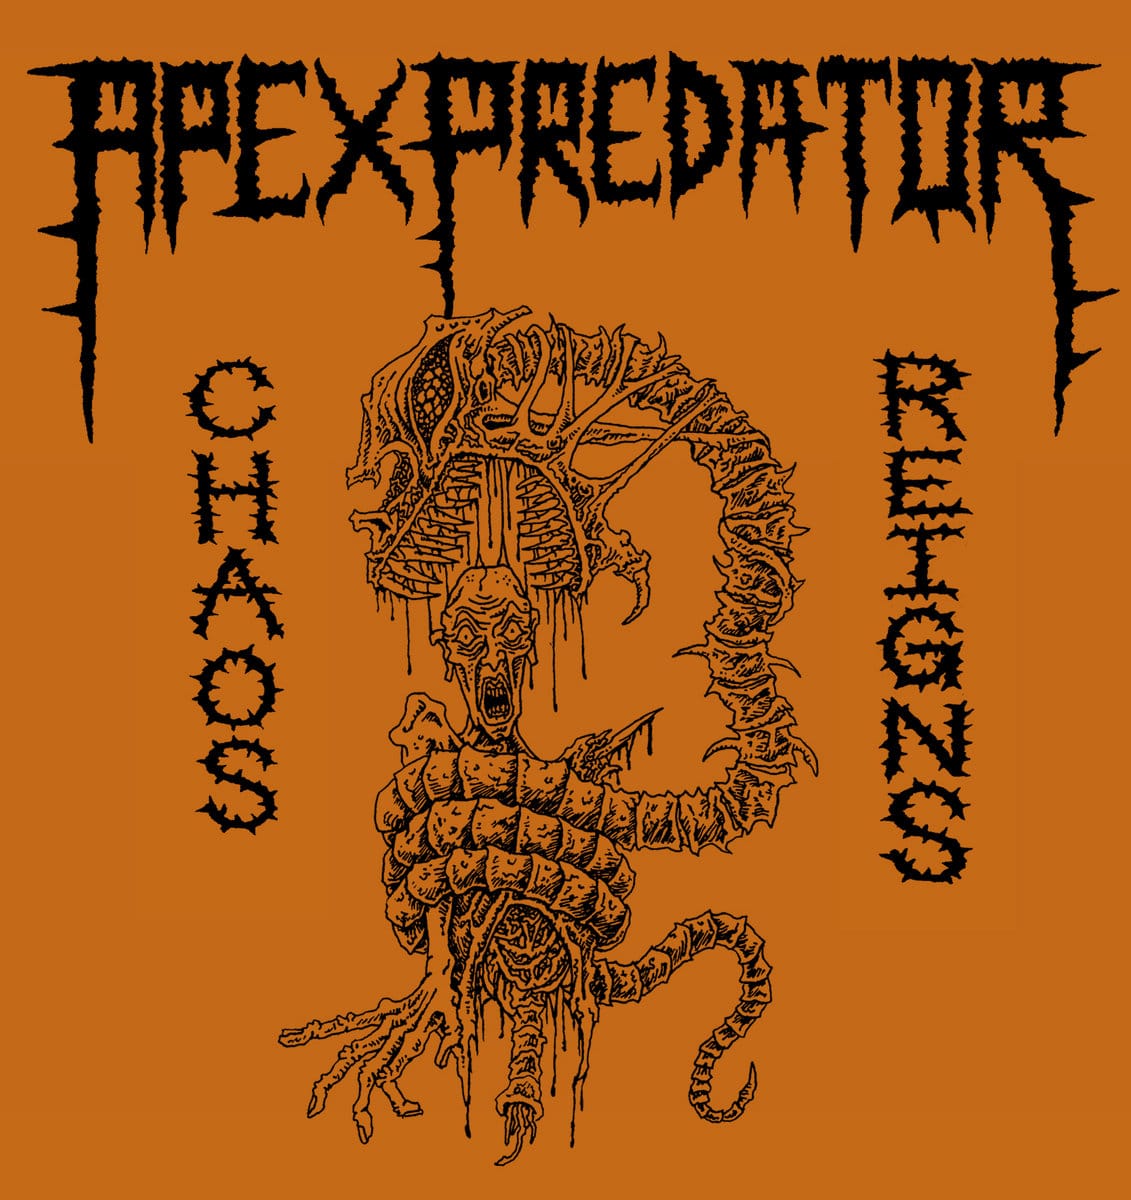 Apex Predator_Chaos Reigns